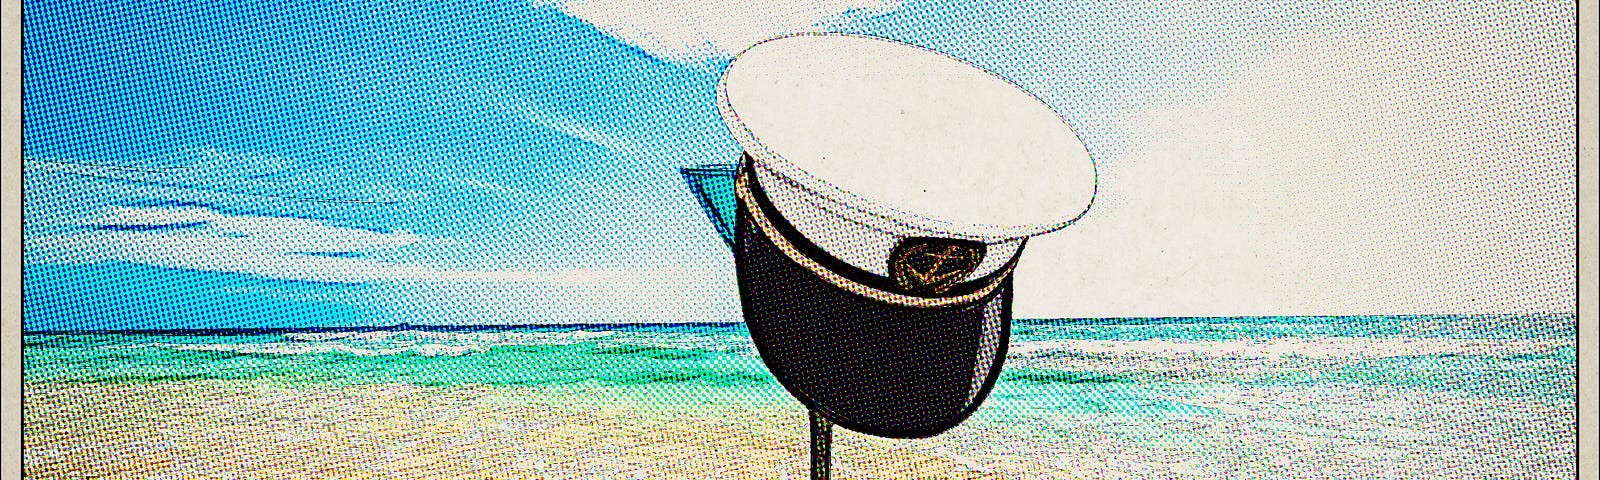 martini and skippers cap on beach